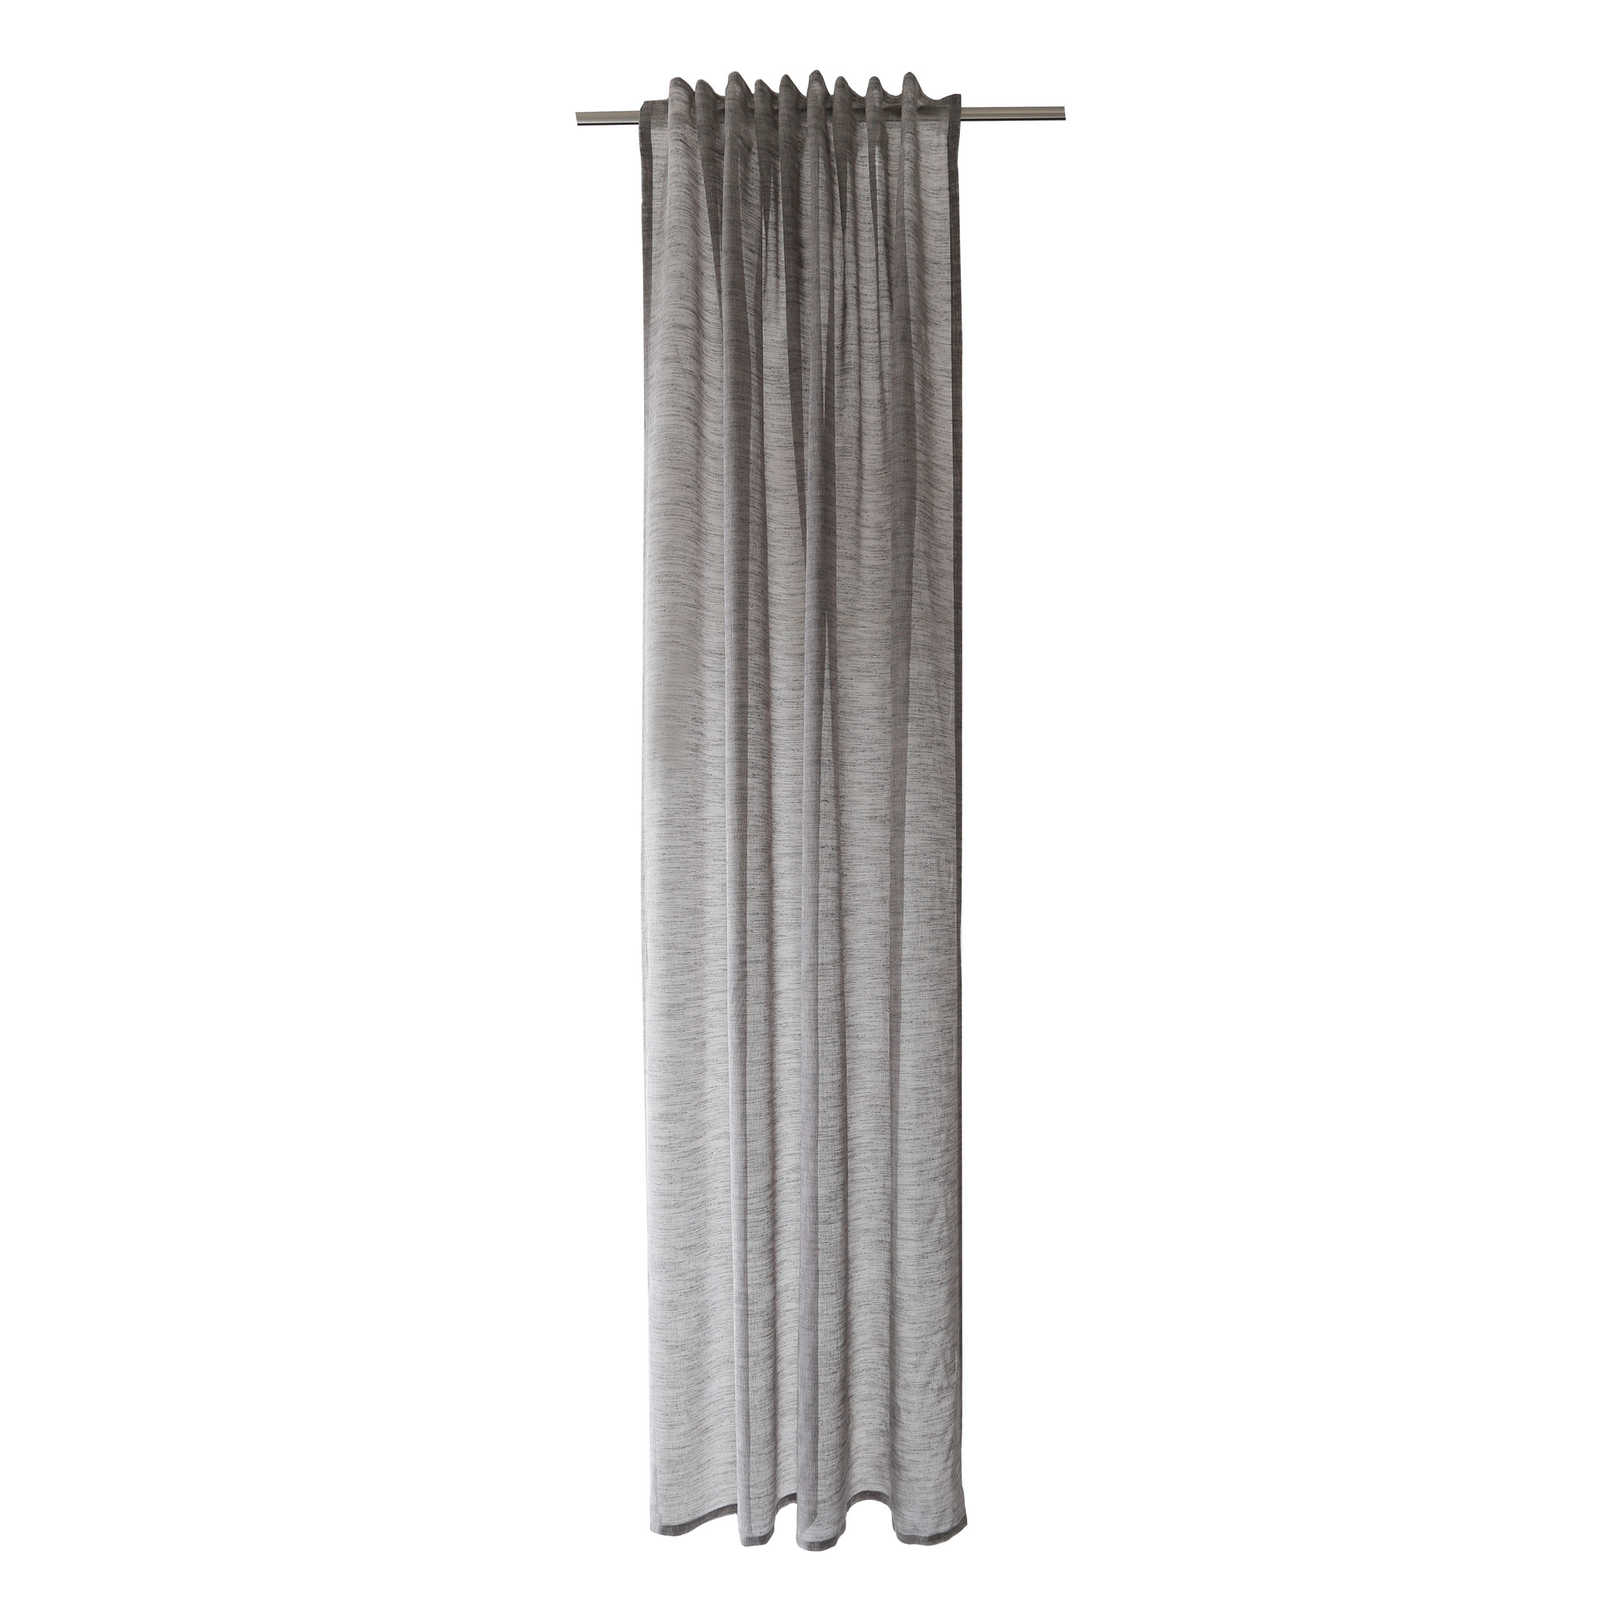         Decorative loop scarf 140 cm x 245 cm synthetic fibre anthracite
    